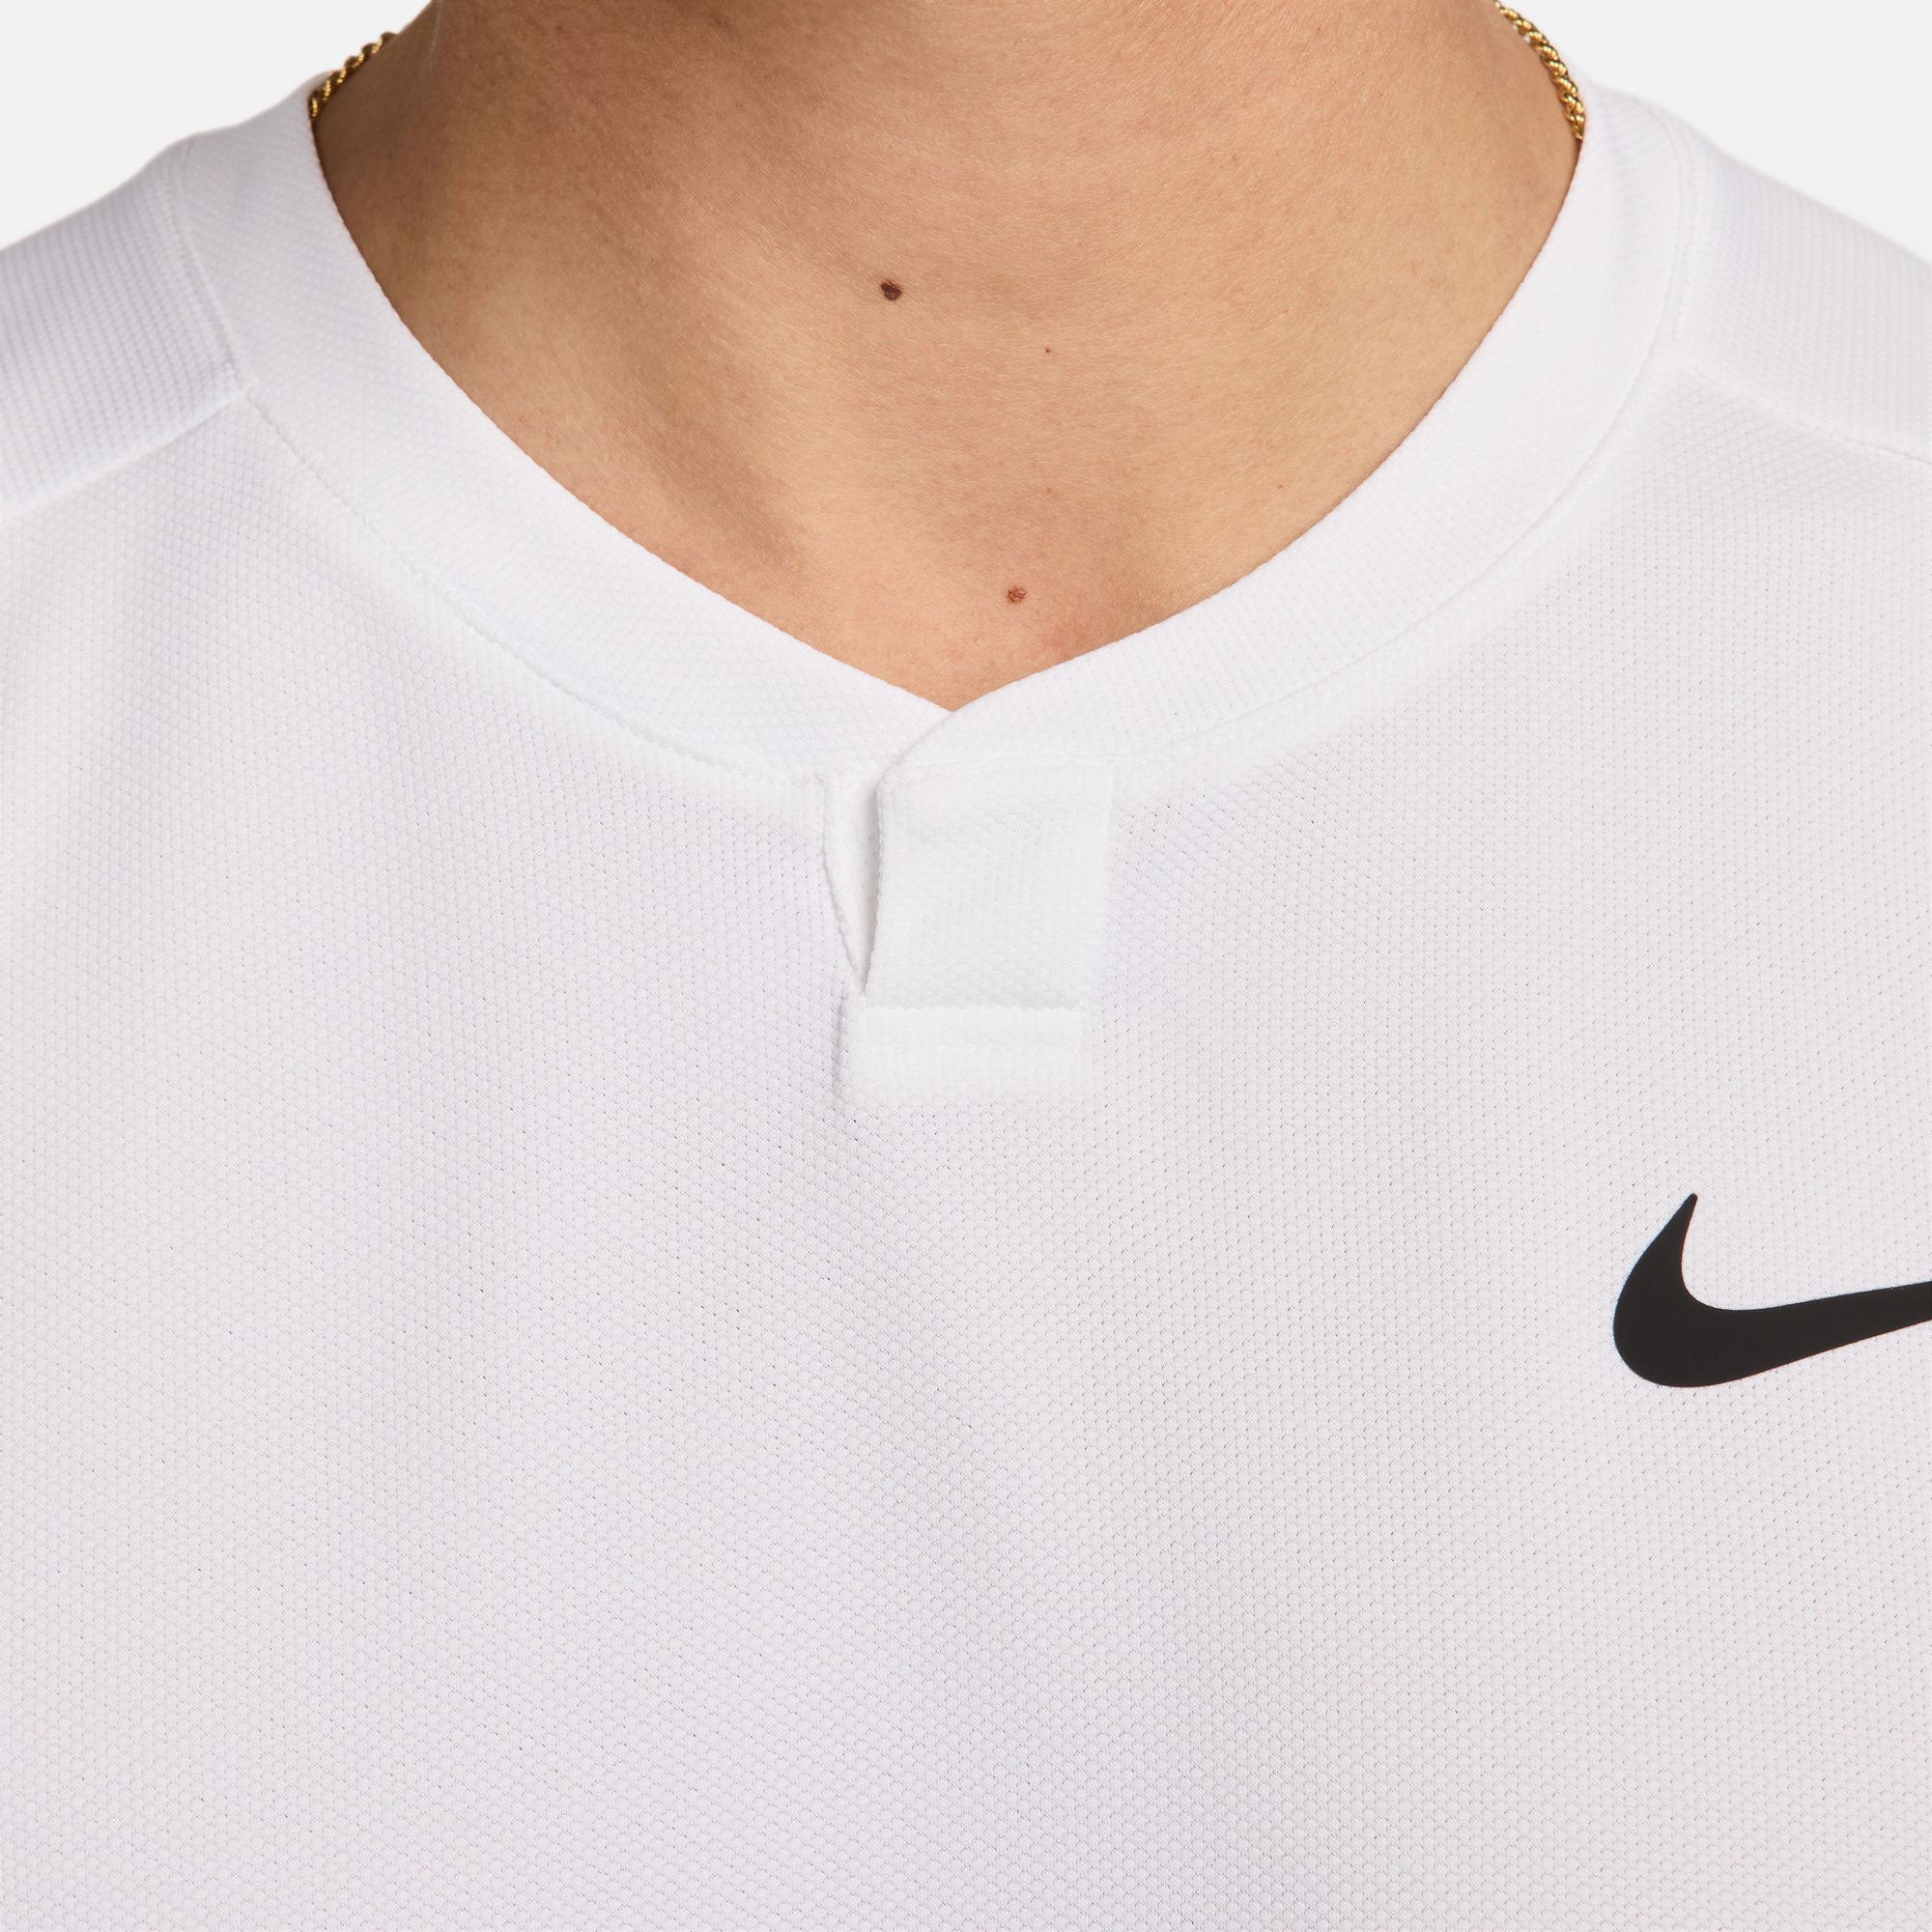 NikeCourt Slam London Men's Dri-FIT Tennis Shirt - White (4)